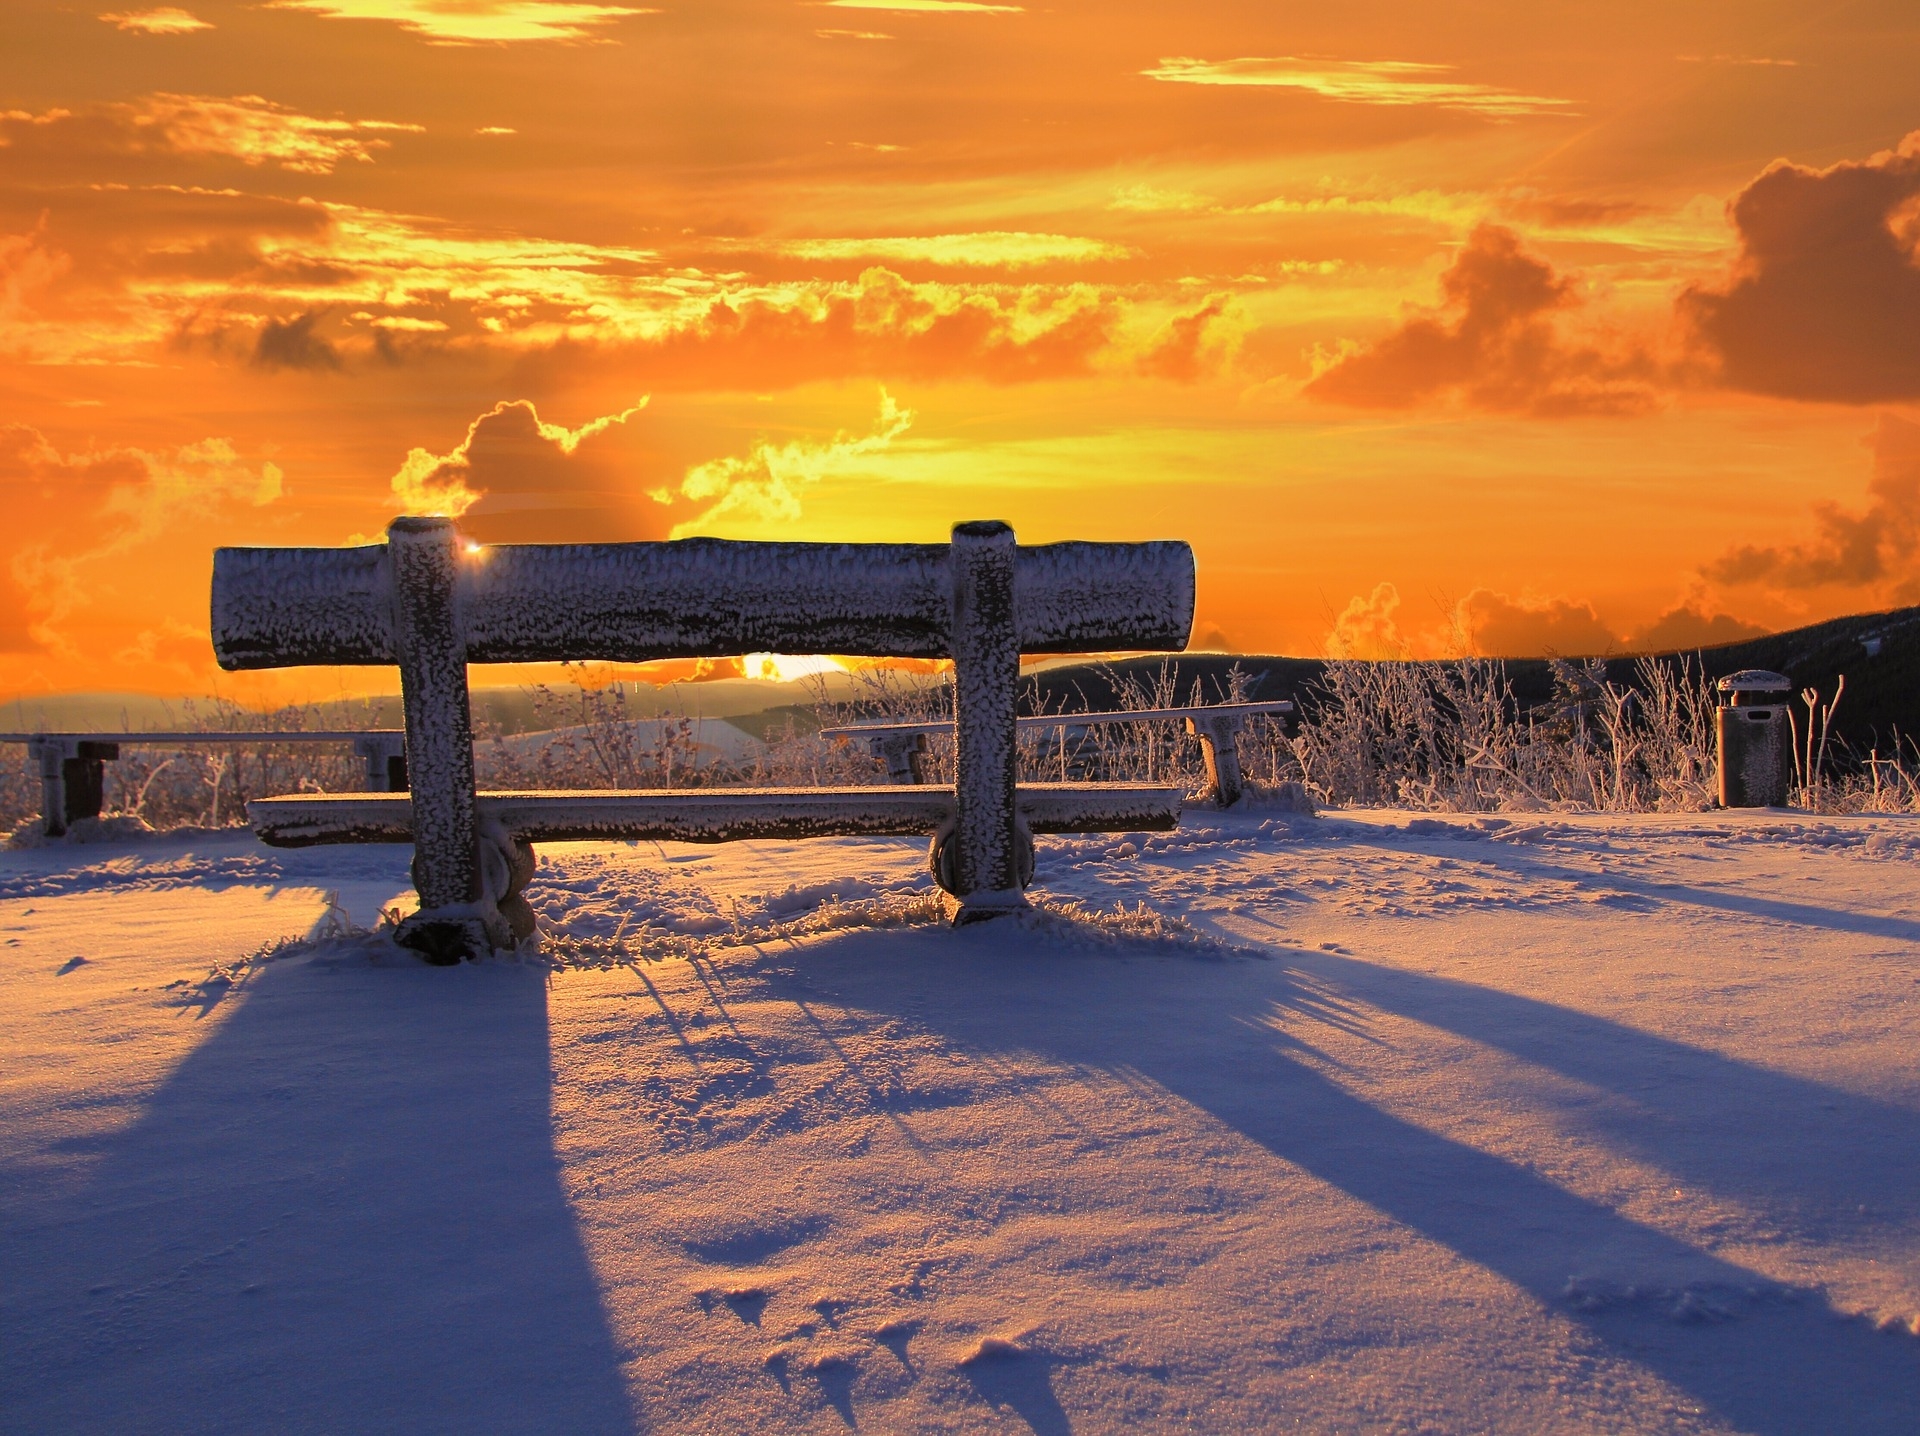 https://pixabay.com/en/edits-sunset-bench-valley-winter-2580661/